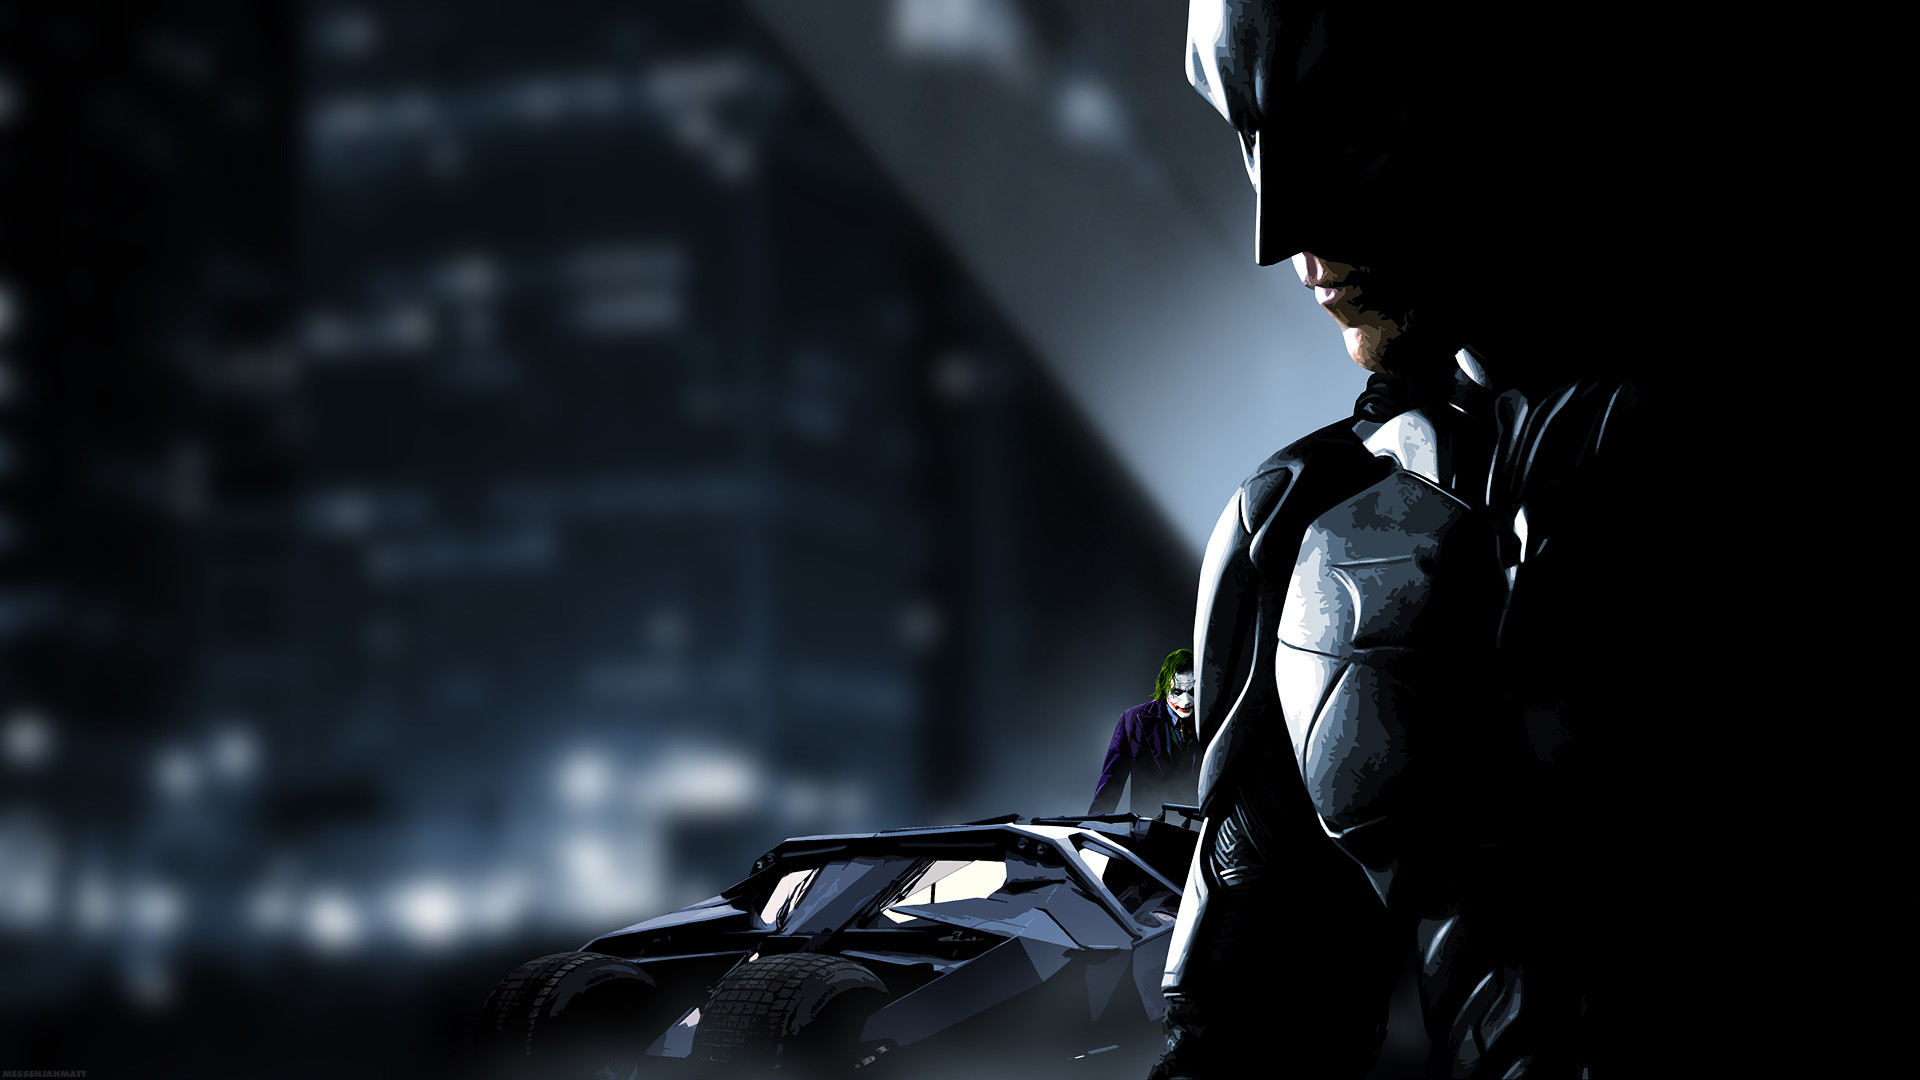 1920x1080 25+ beste ideeÃ«n over Hd batman wallpaper op Pinterest - Batman, Batman  poster en Superhelden